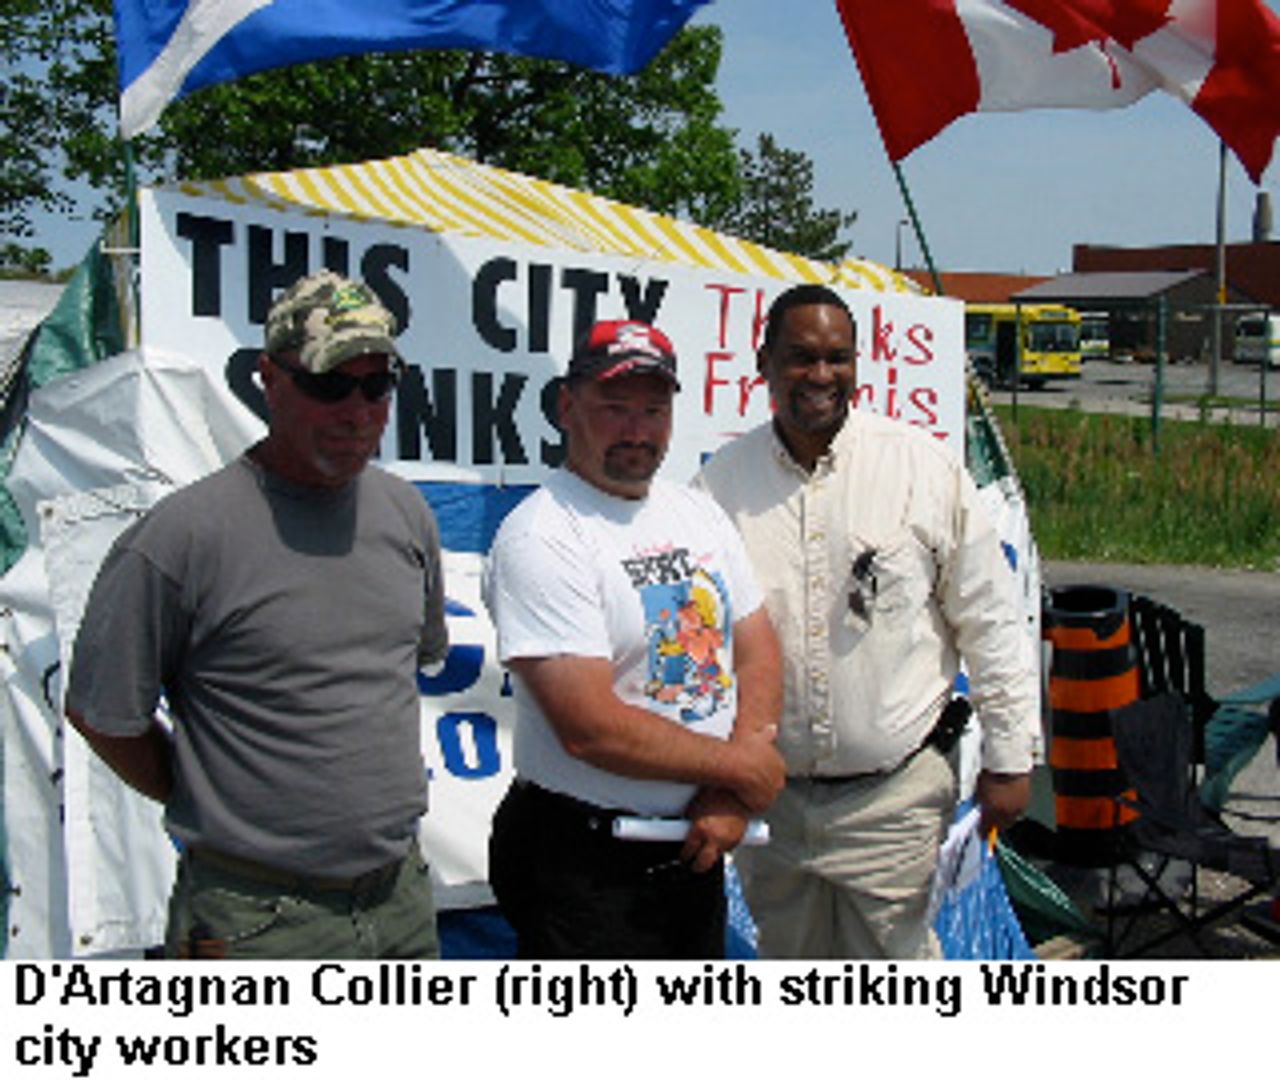 D'Artagnan Collier speaking with striking city workers in Windsor, Ontario